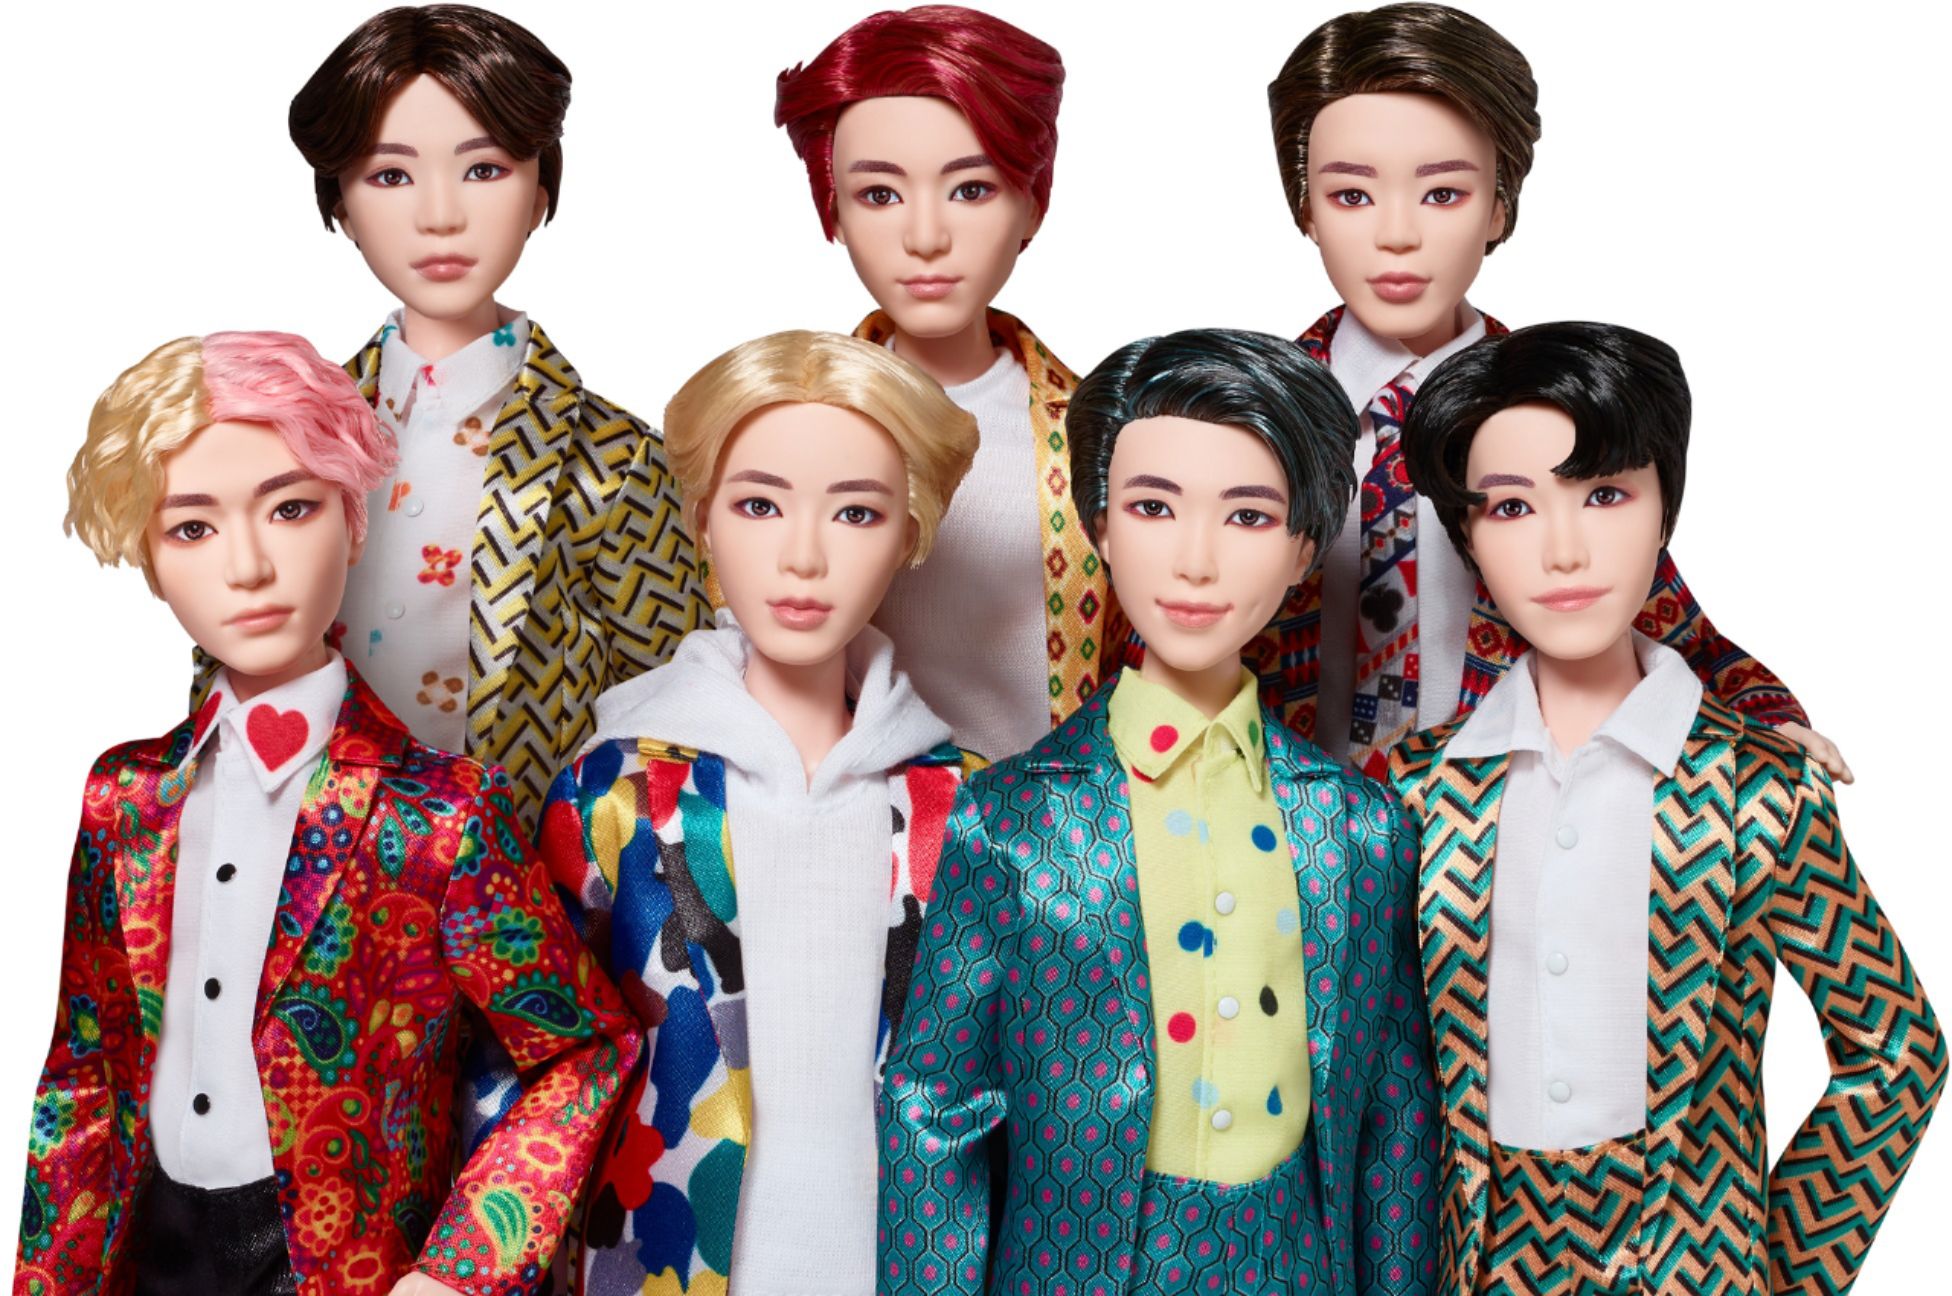 BTS KPOP Boy Band Jin Fashion Doll Mattel GKC88 for sale online 